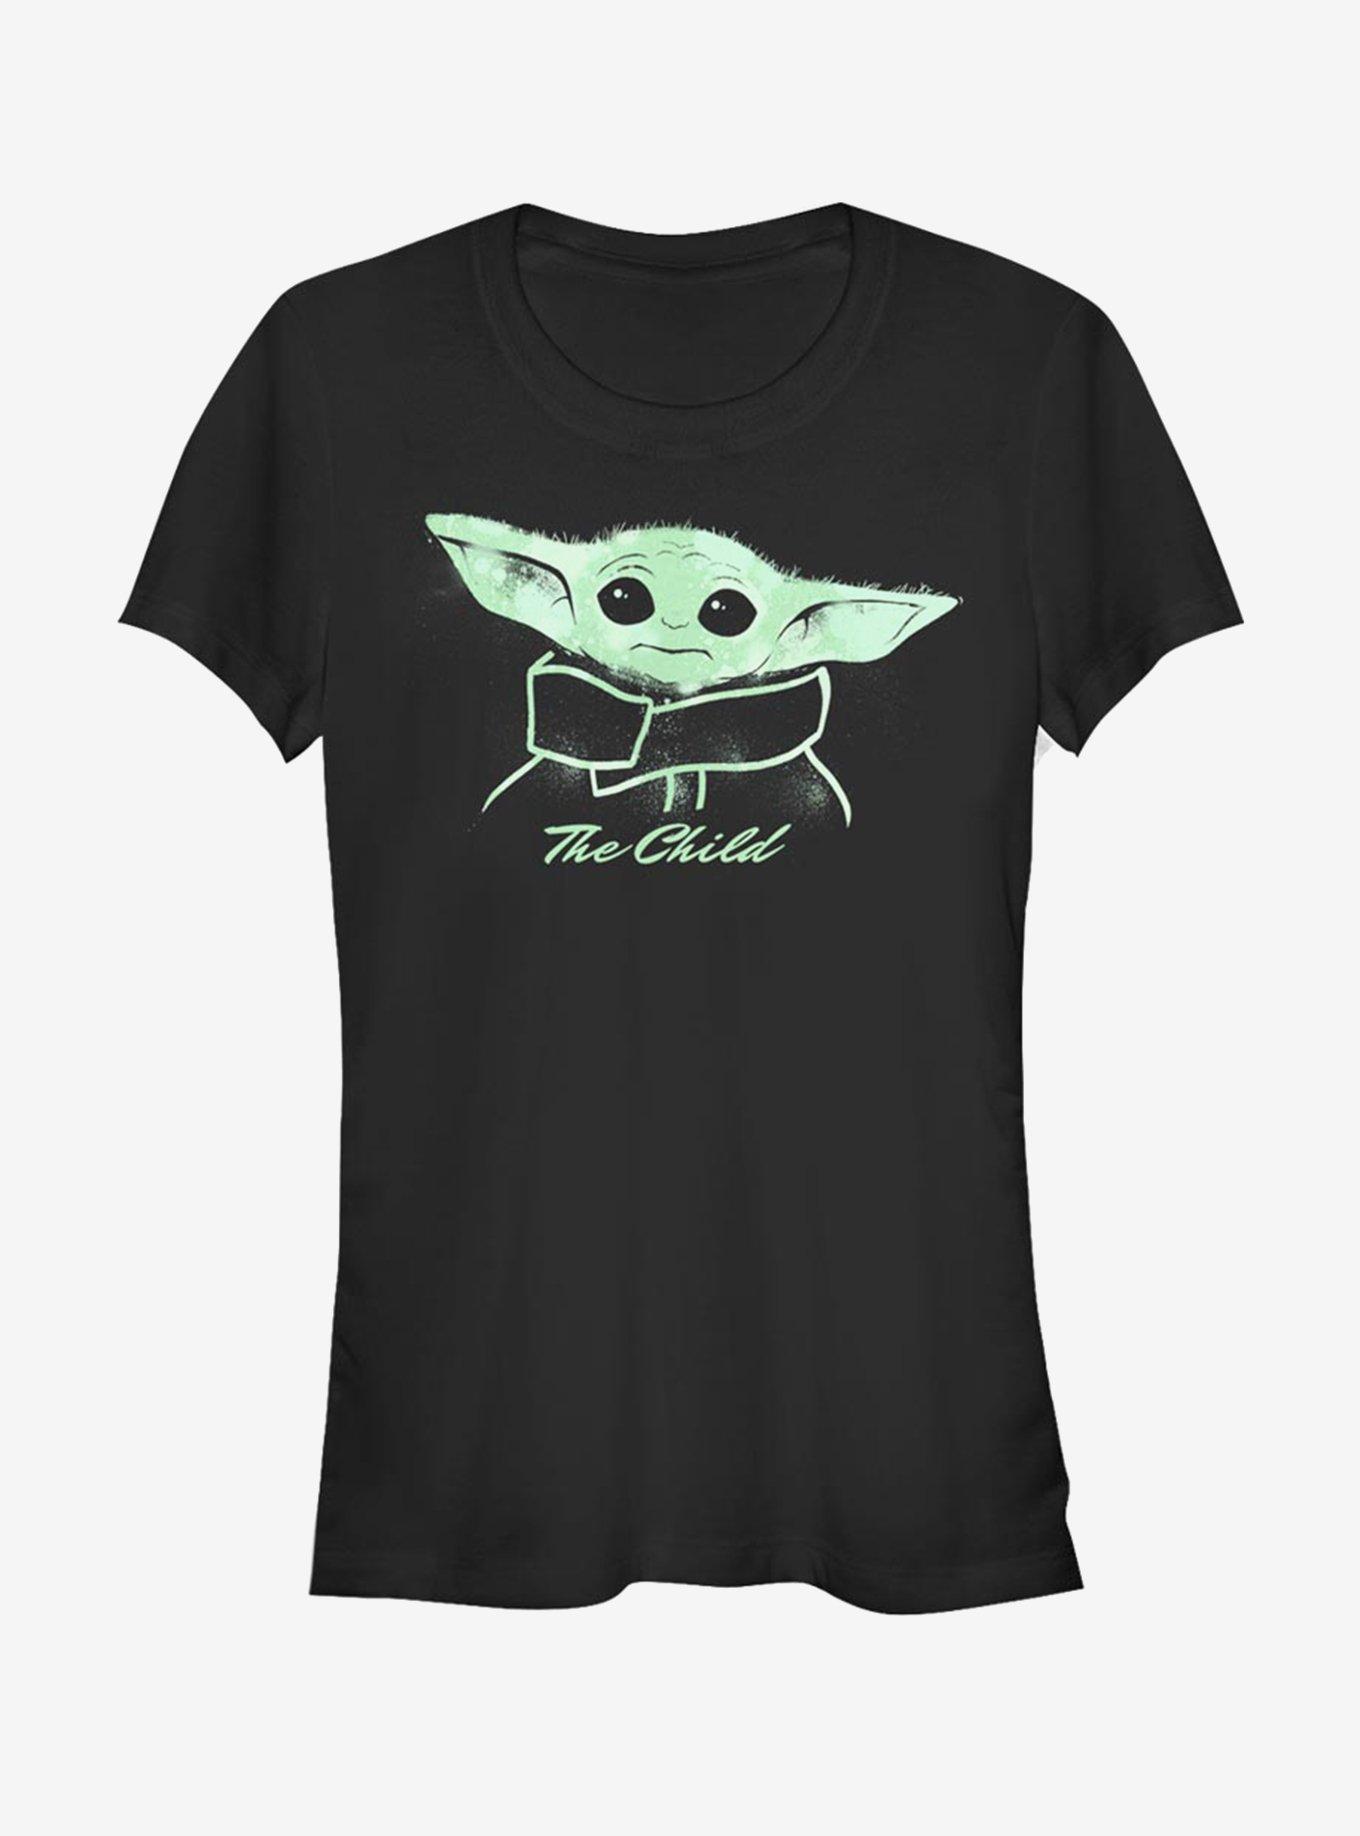 Star Wars The Mandalorian Child Painted Girls T-Shirt